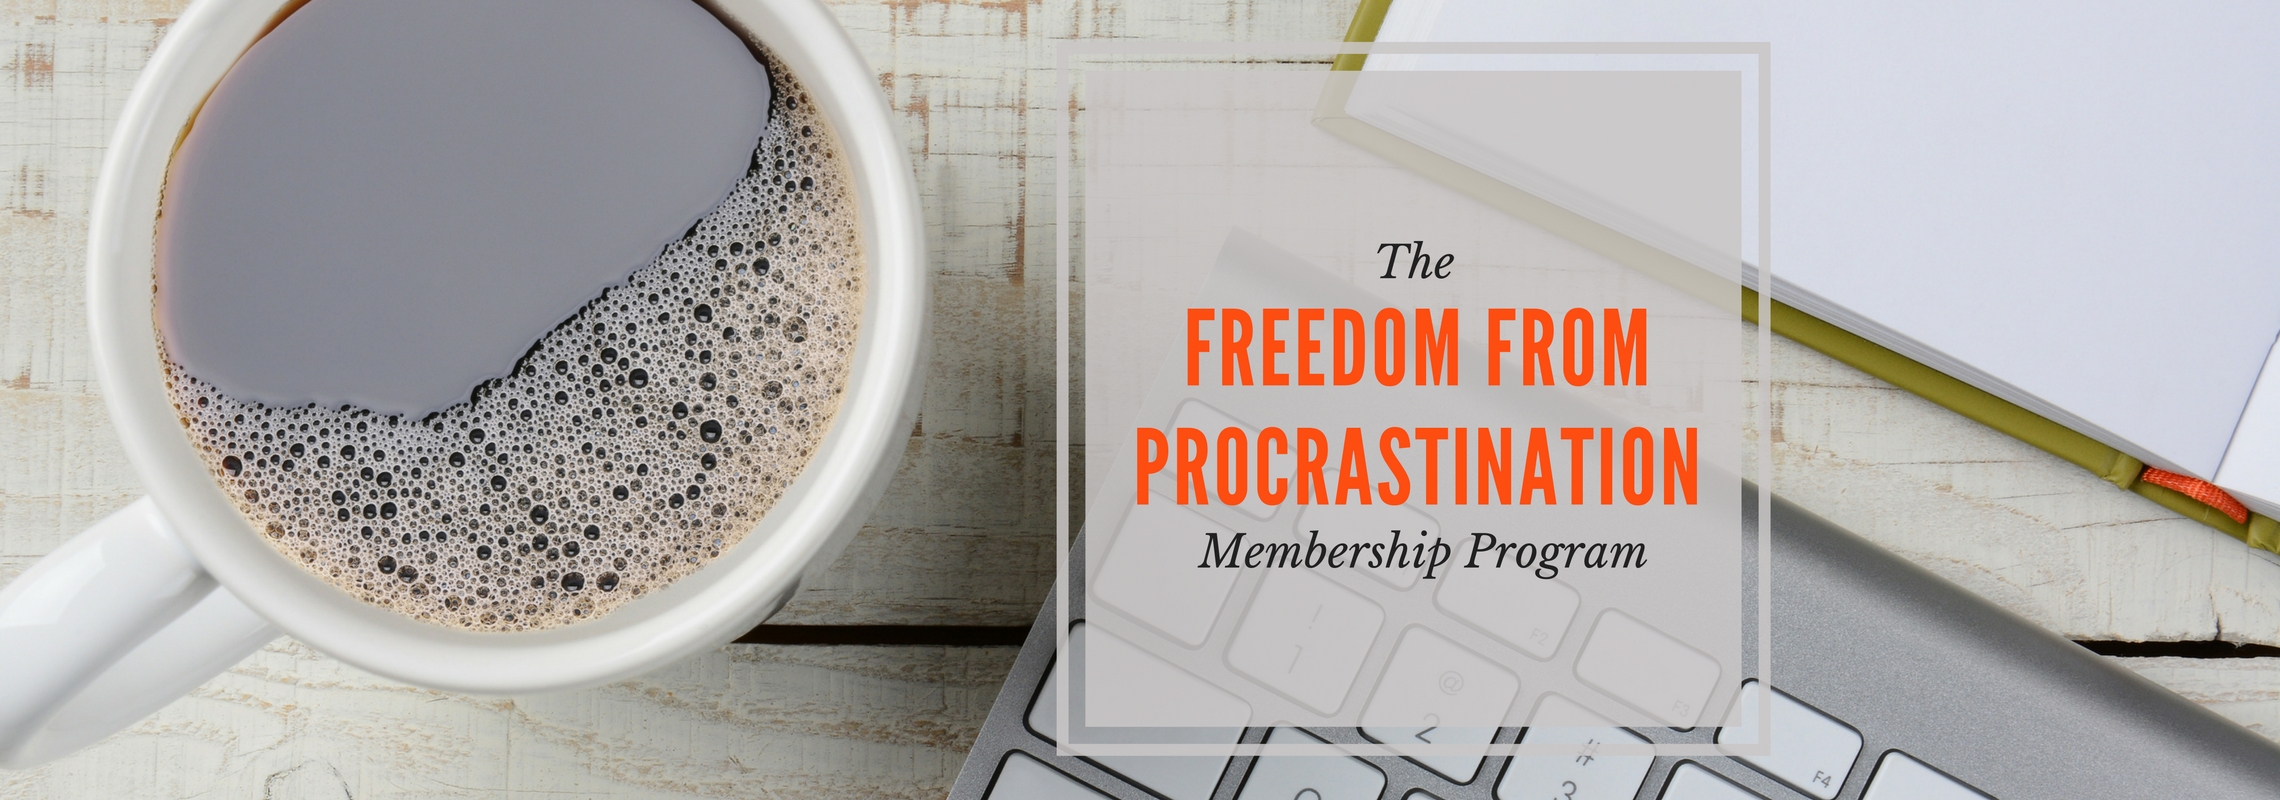 The Freedom from Procrastination Membership Program